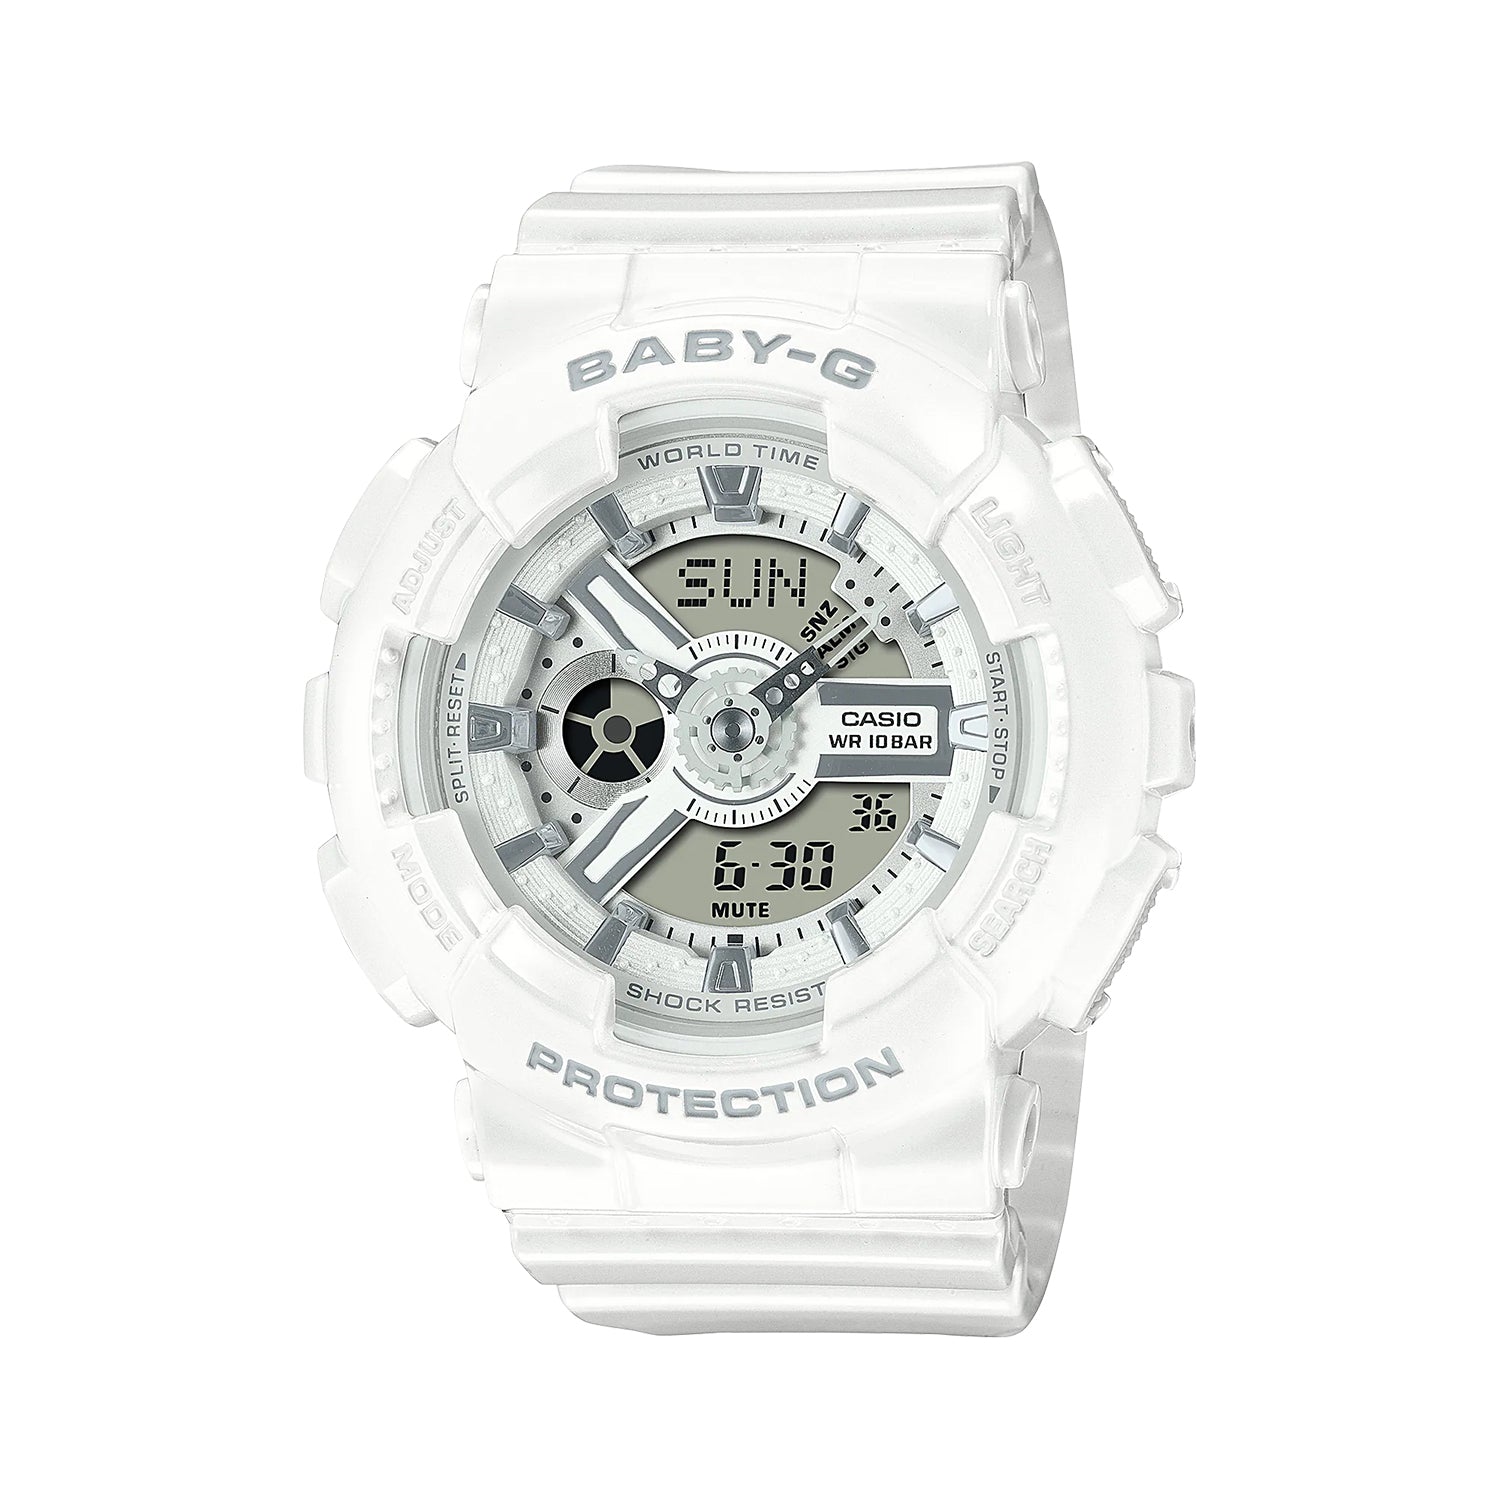 CASIO BABY-G BA-110X-7A3 腕時計 ba-110x-7a3